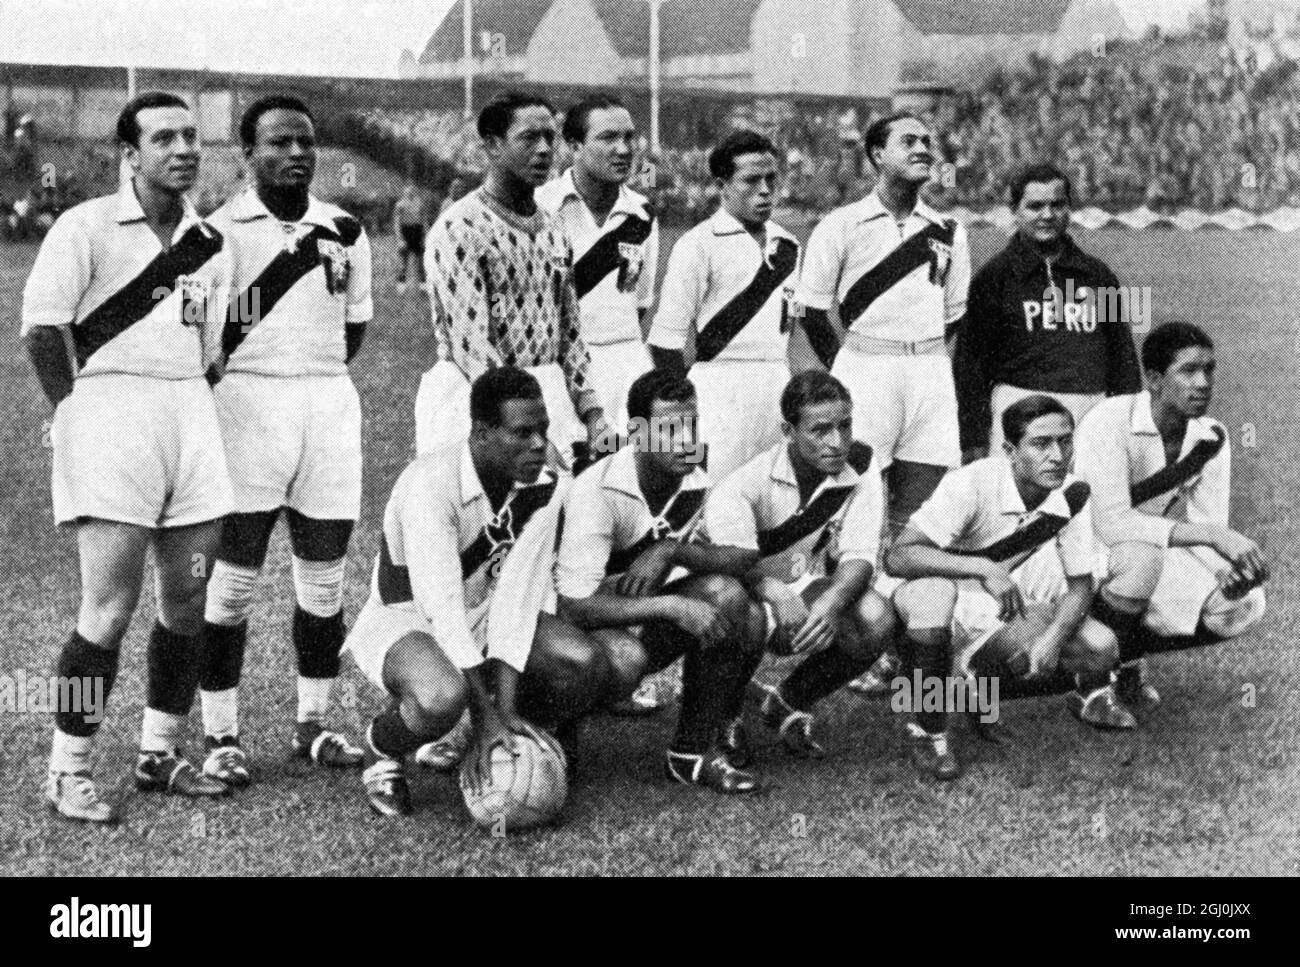 Jeux Olympiques de 1936, Berlin - équipes de football du monde entier - Pérou Fussballmannschaften aus aller Welt - Pérou ©TopFoto Banque D'Images